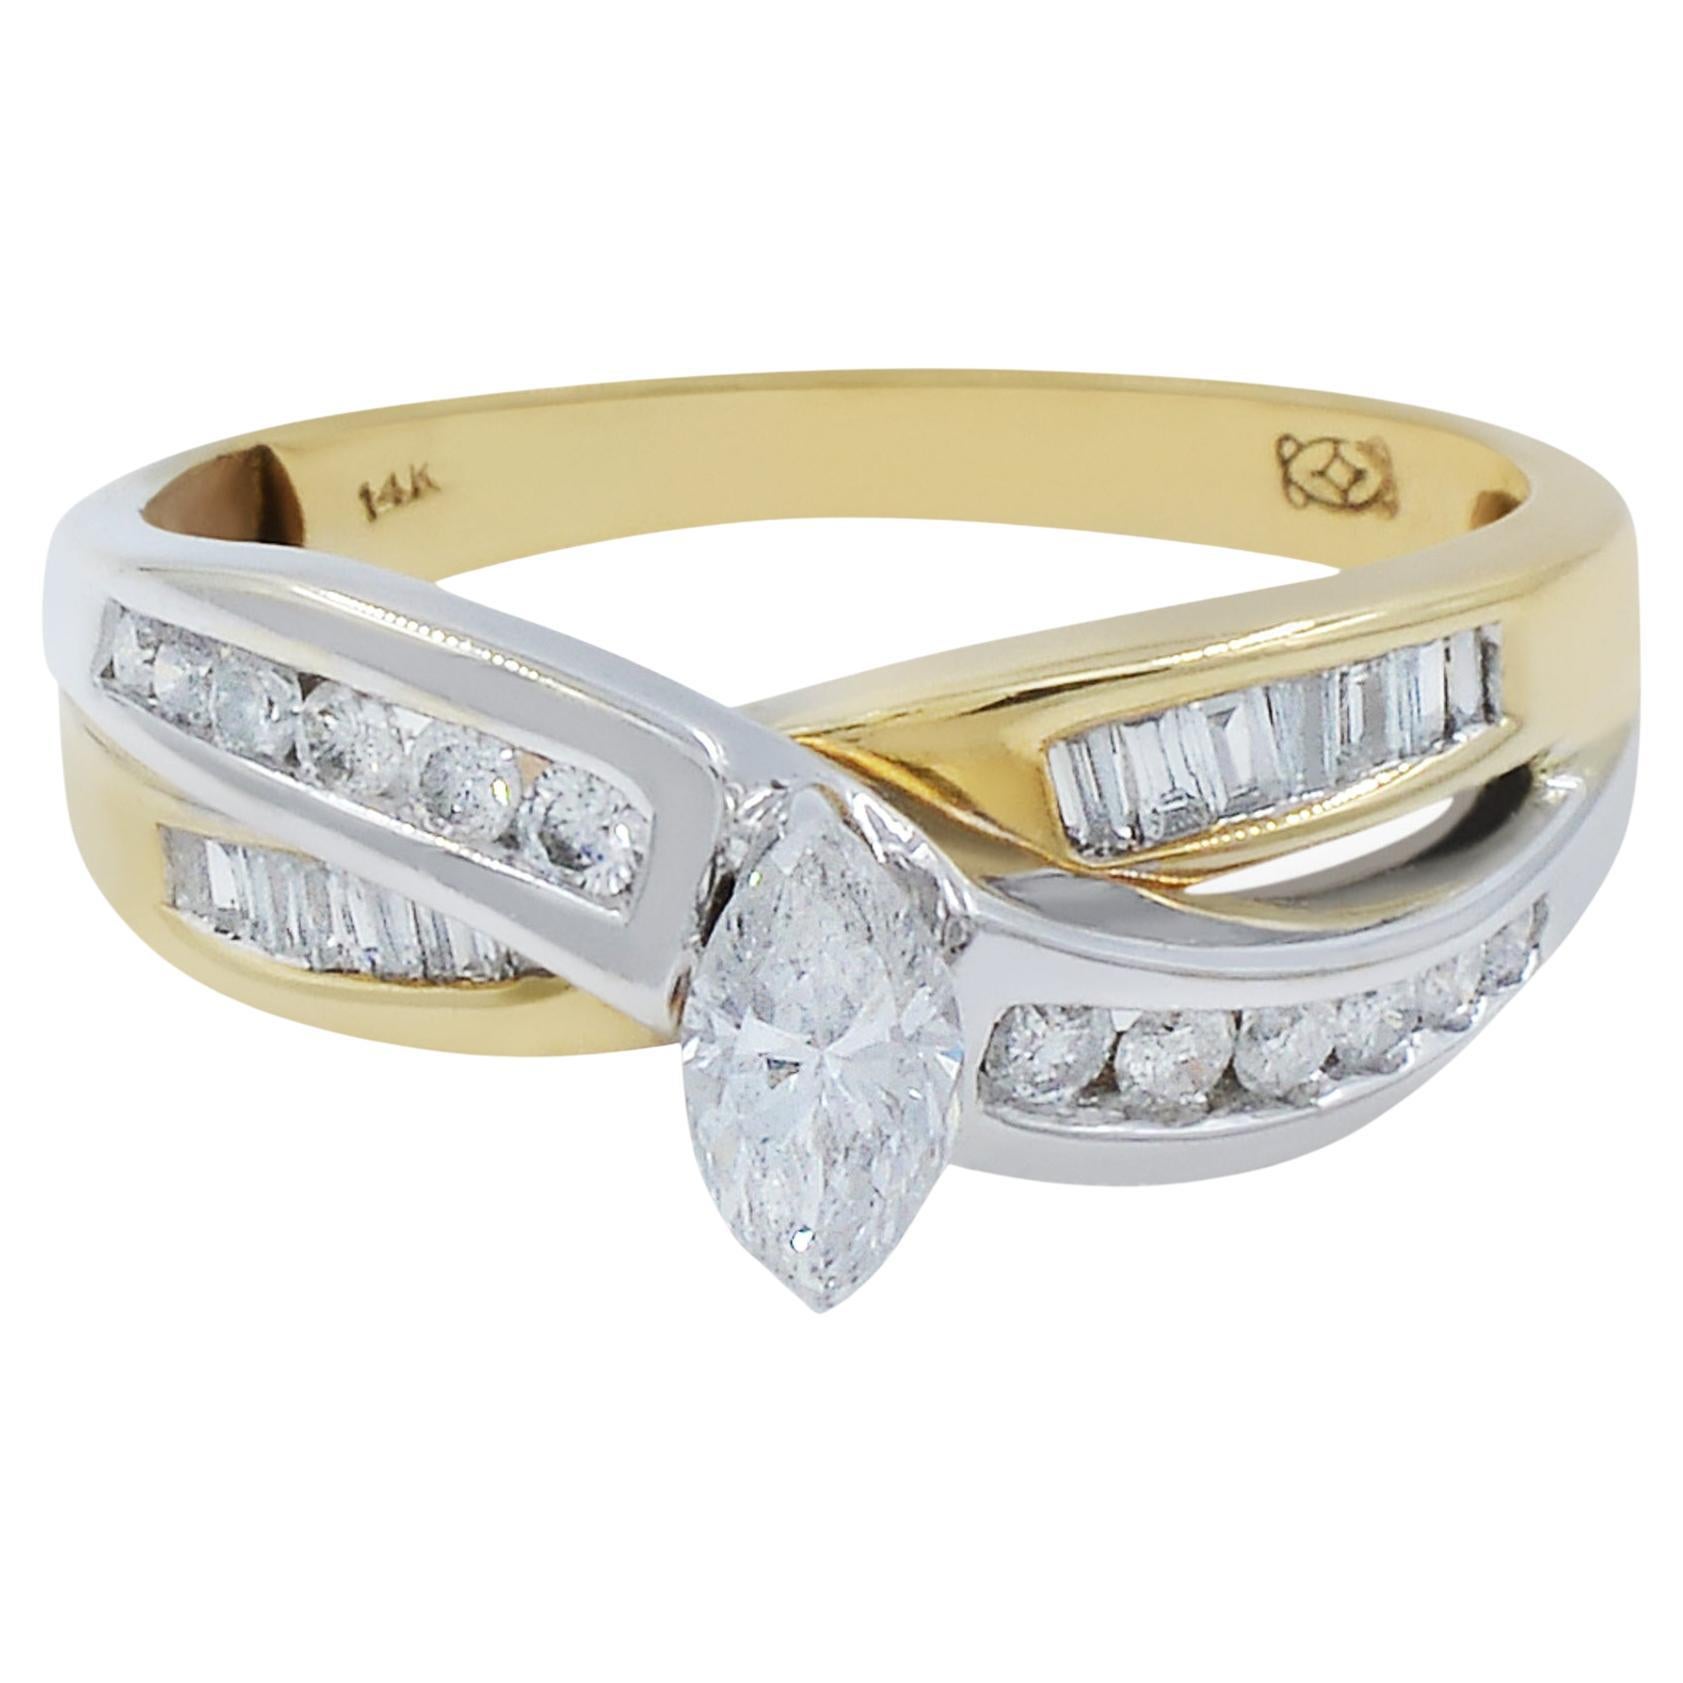 Rachel Koen Marquise Cut Diamond Engagement Ring Set 14K Yellow Gold 1.05Cttw For Sale